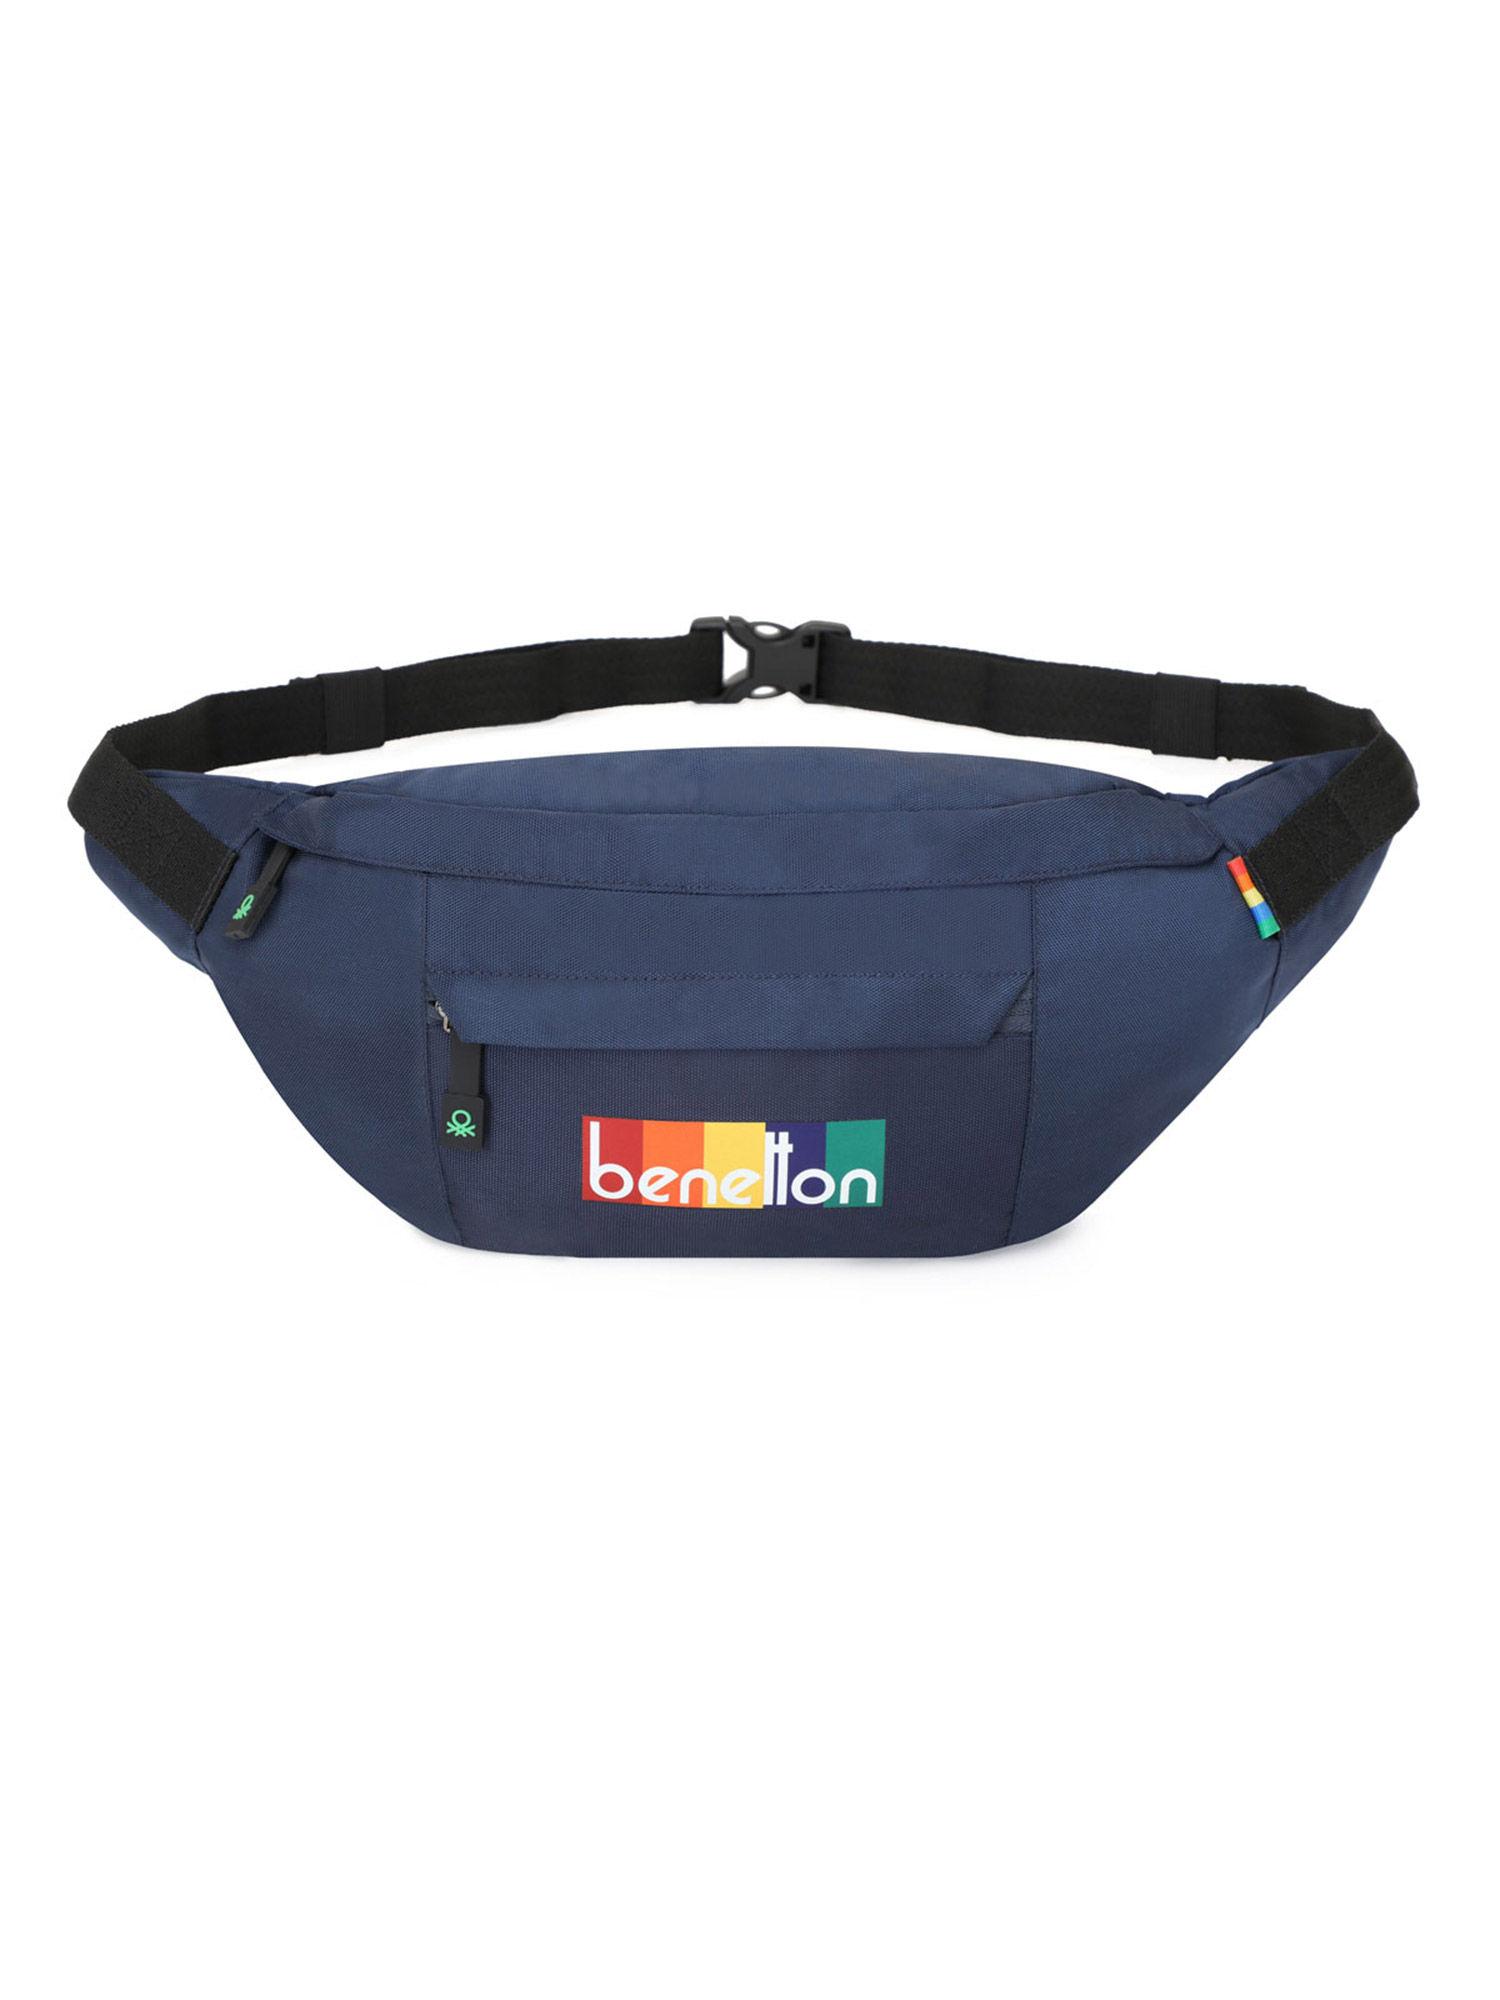 trellis unisex polyester waist bags navy blue (s)